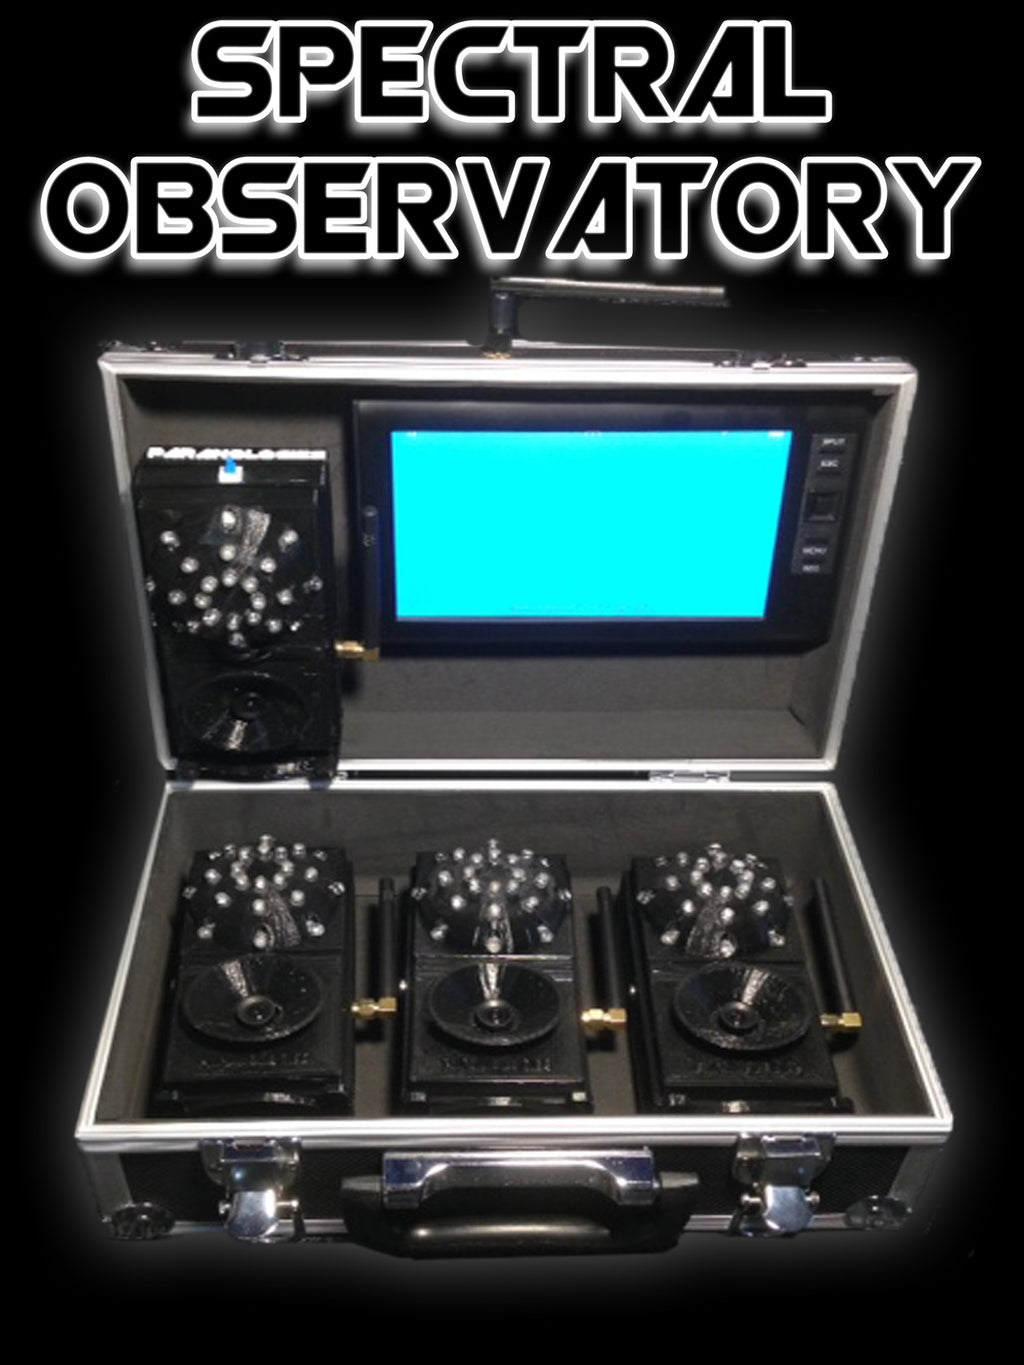 Wireless Spectral Observatory 4 Channel DVR System